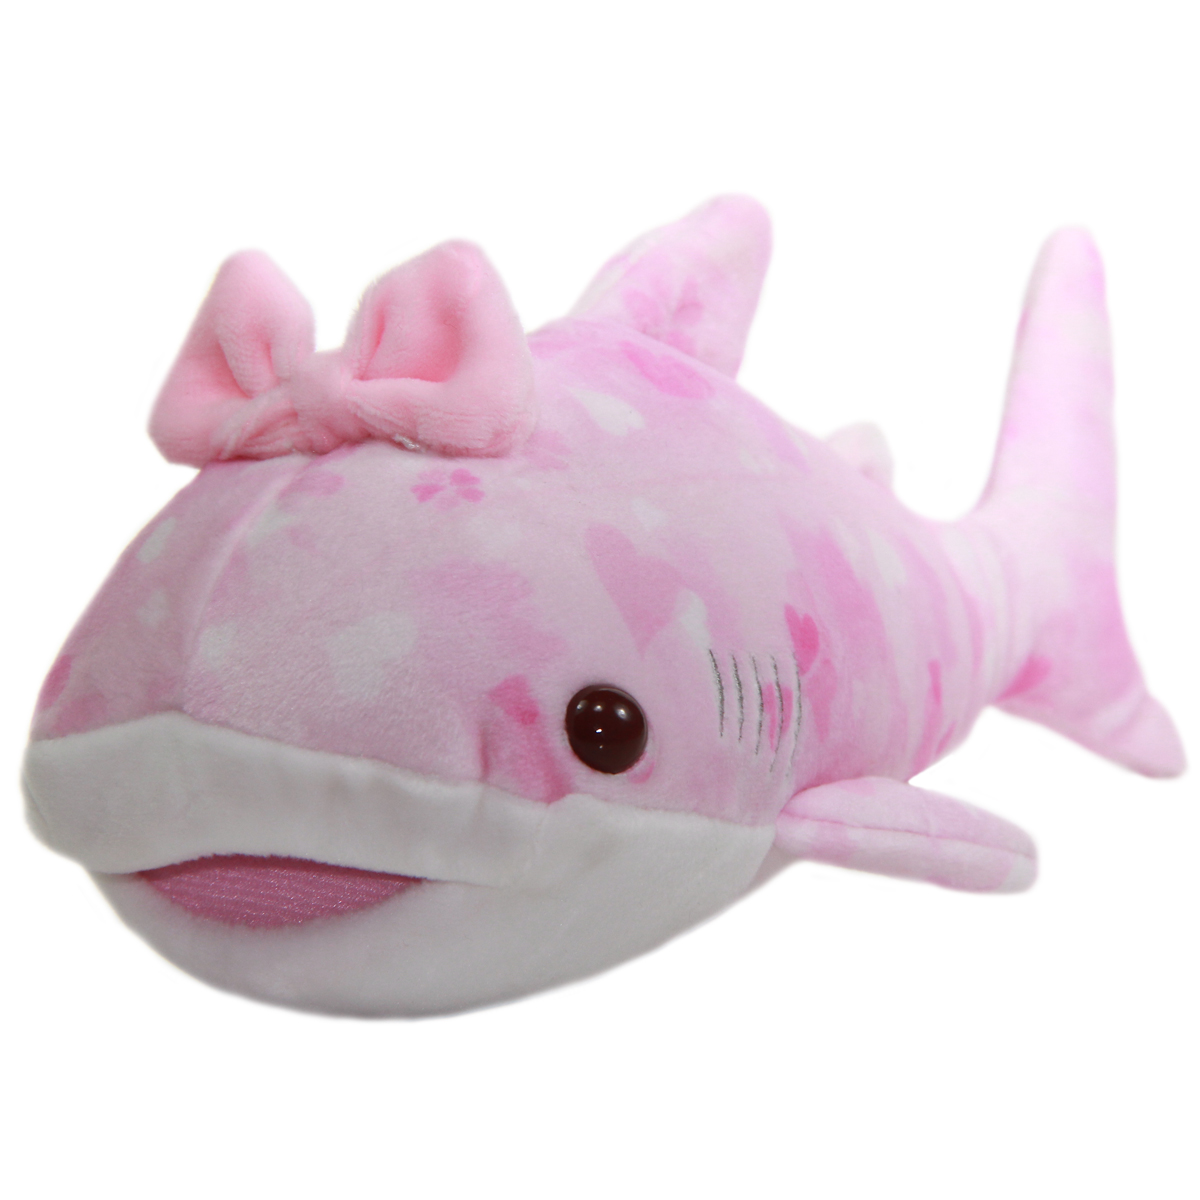 Aquarium Collection Plush Whale Shark Plush Toy Super Soft Stuffed Animal Pink White Dot 8 Inches